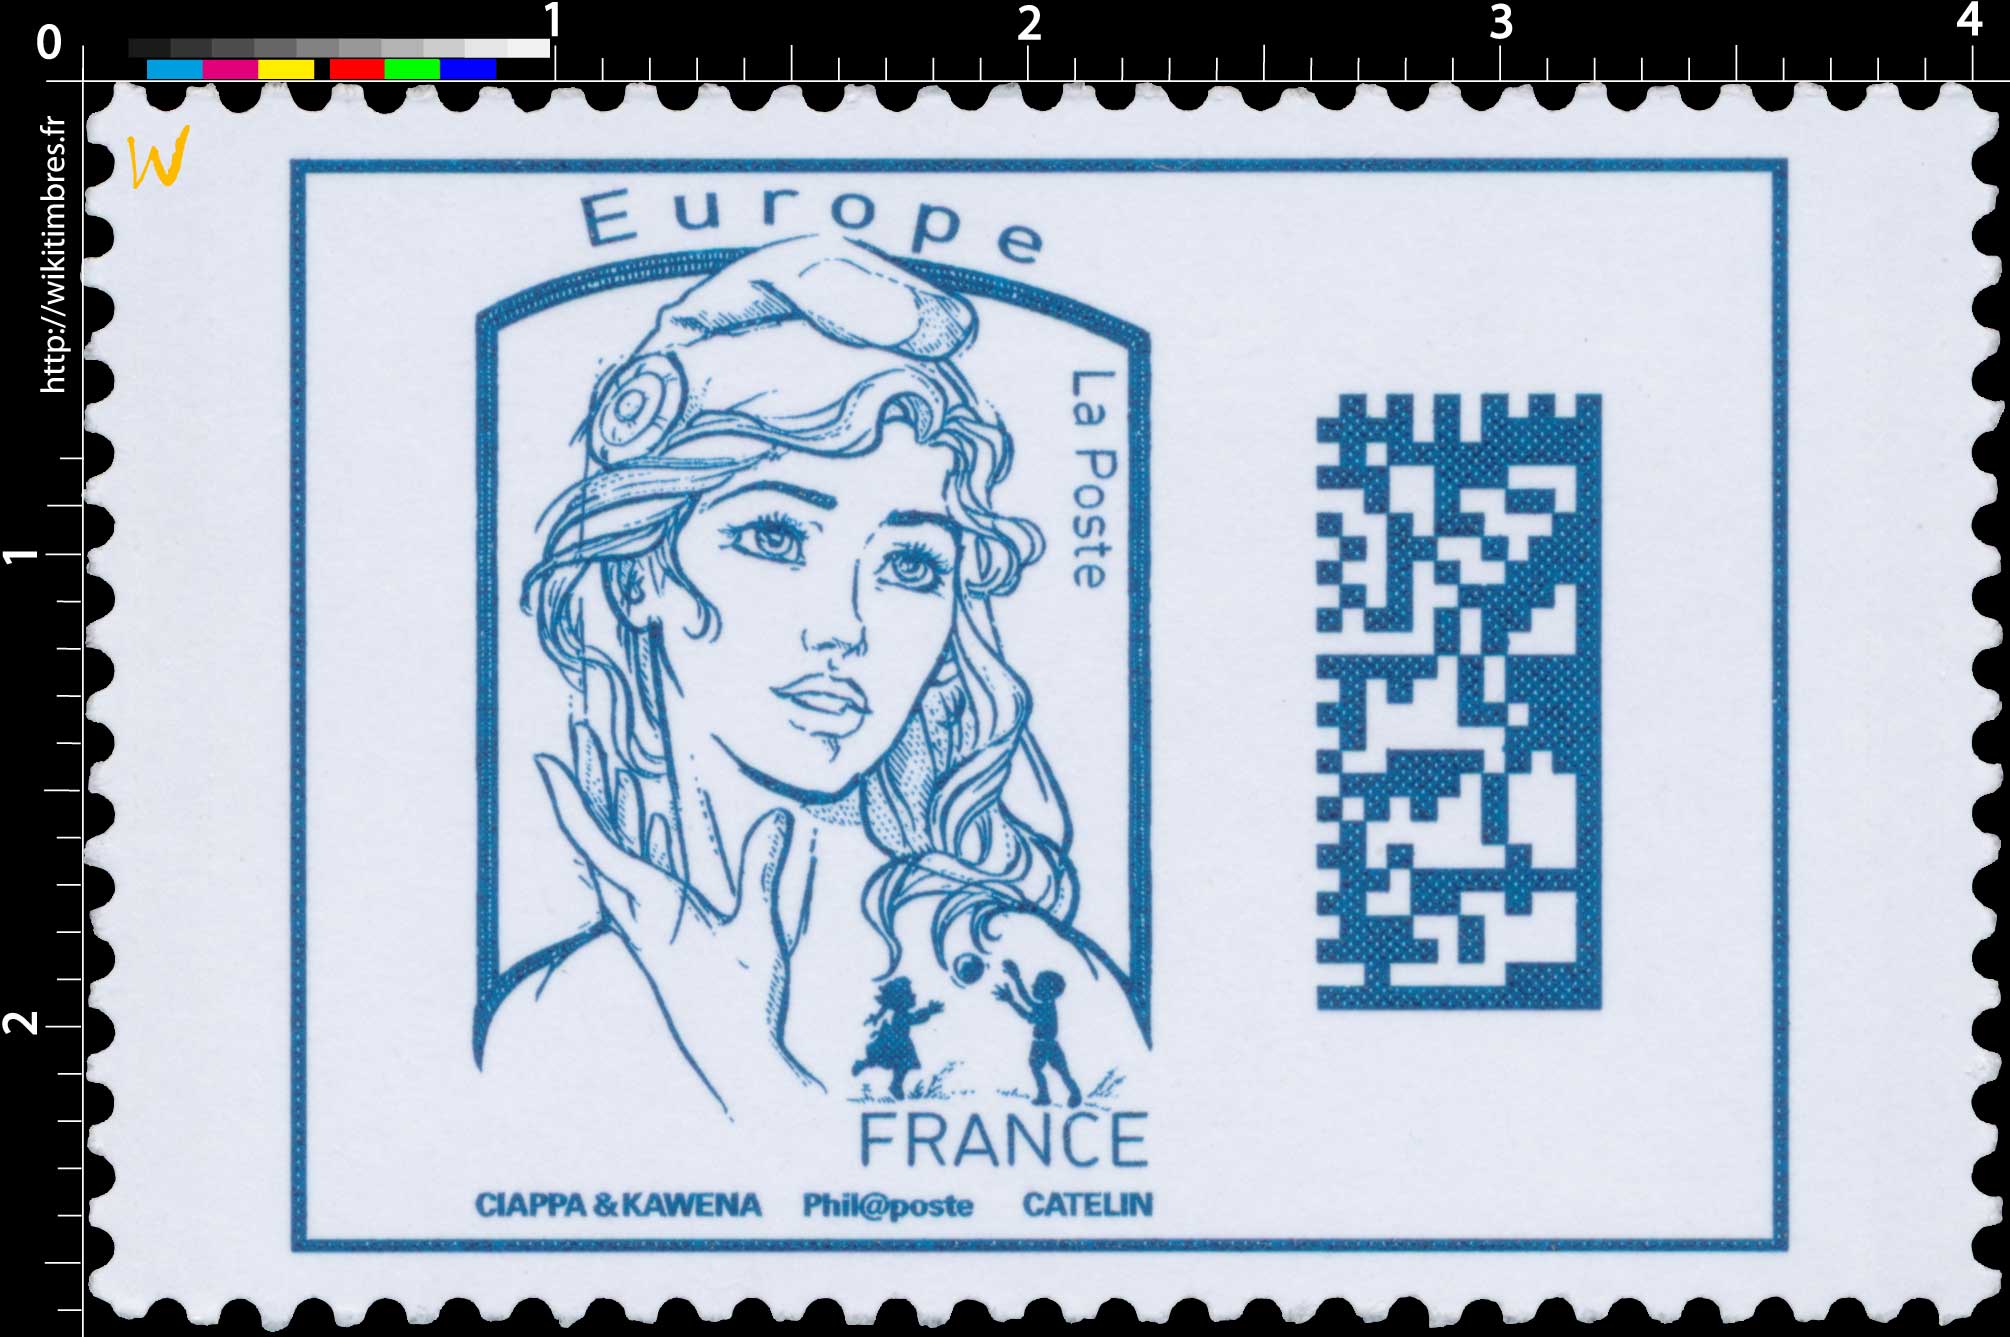 Marianne Europe - Code Datamatrix - 2016